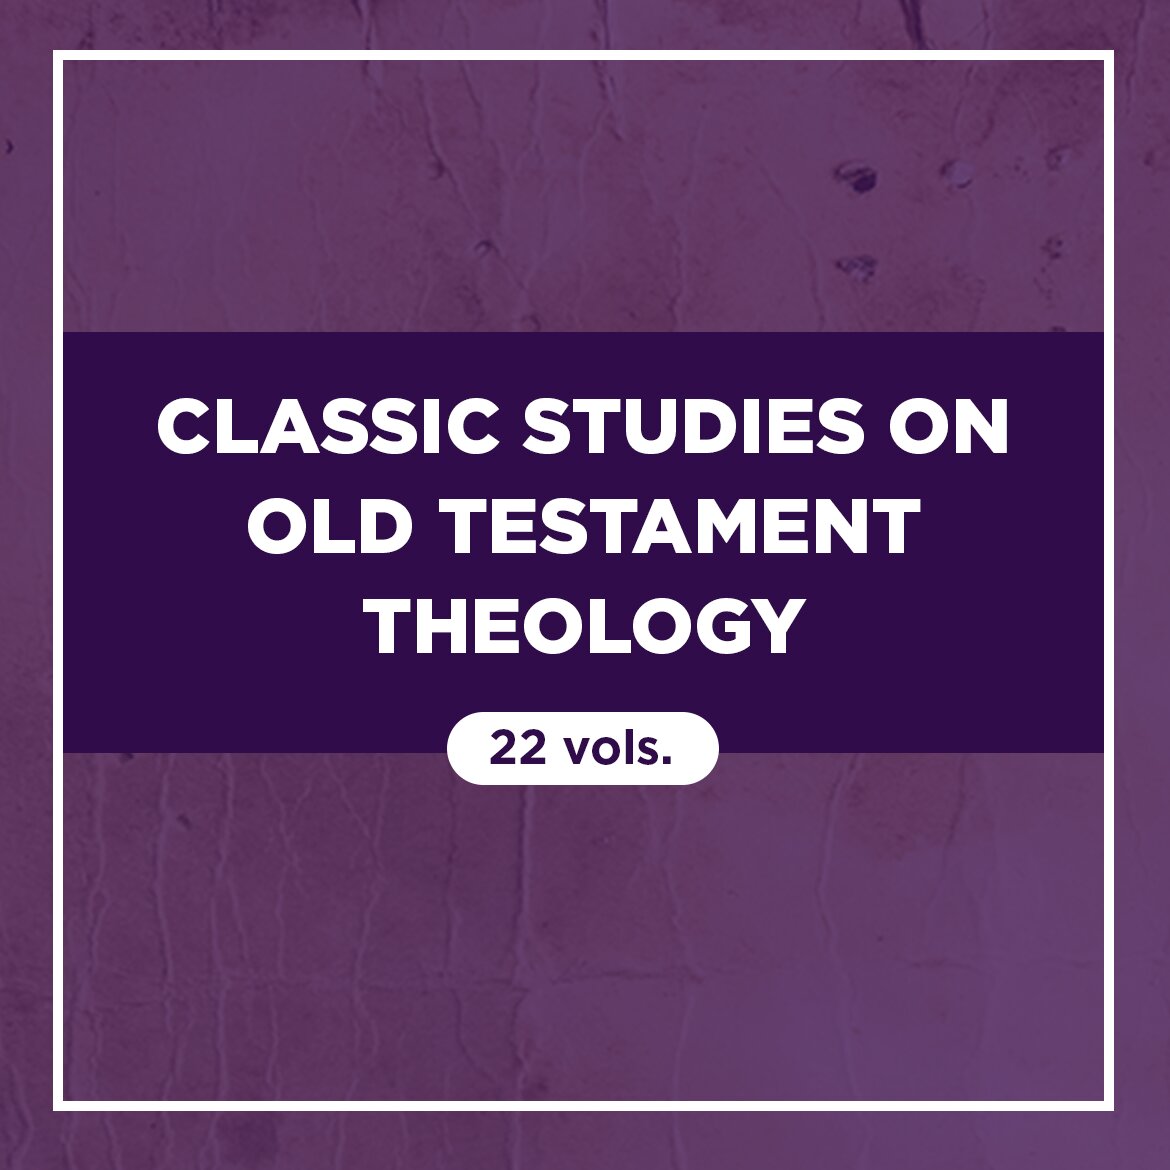 Classic Studies on Old Testament Theology (22 vols.)